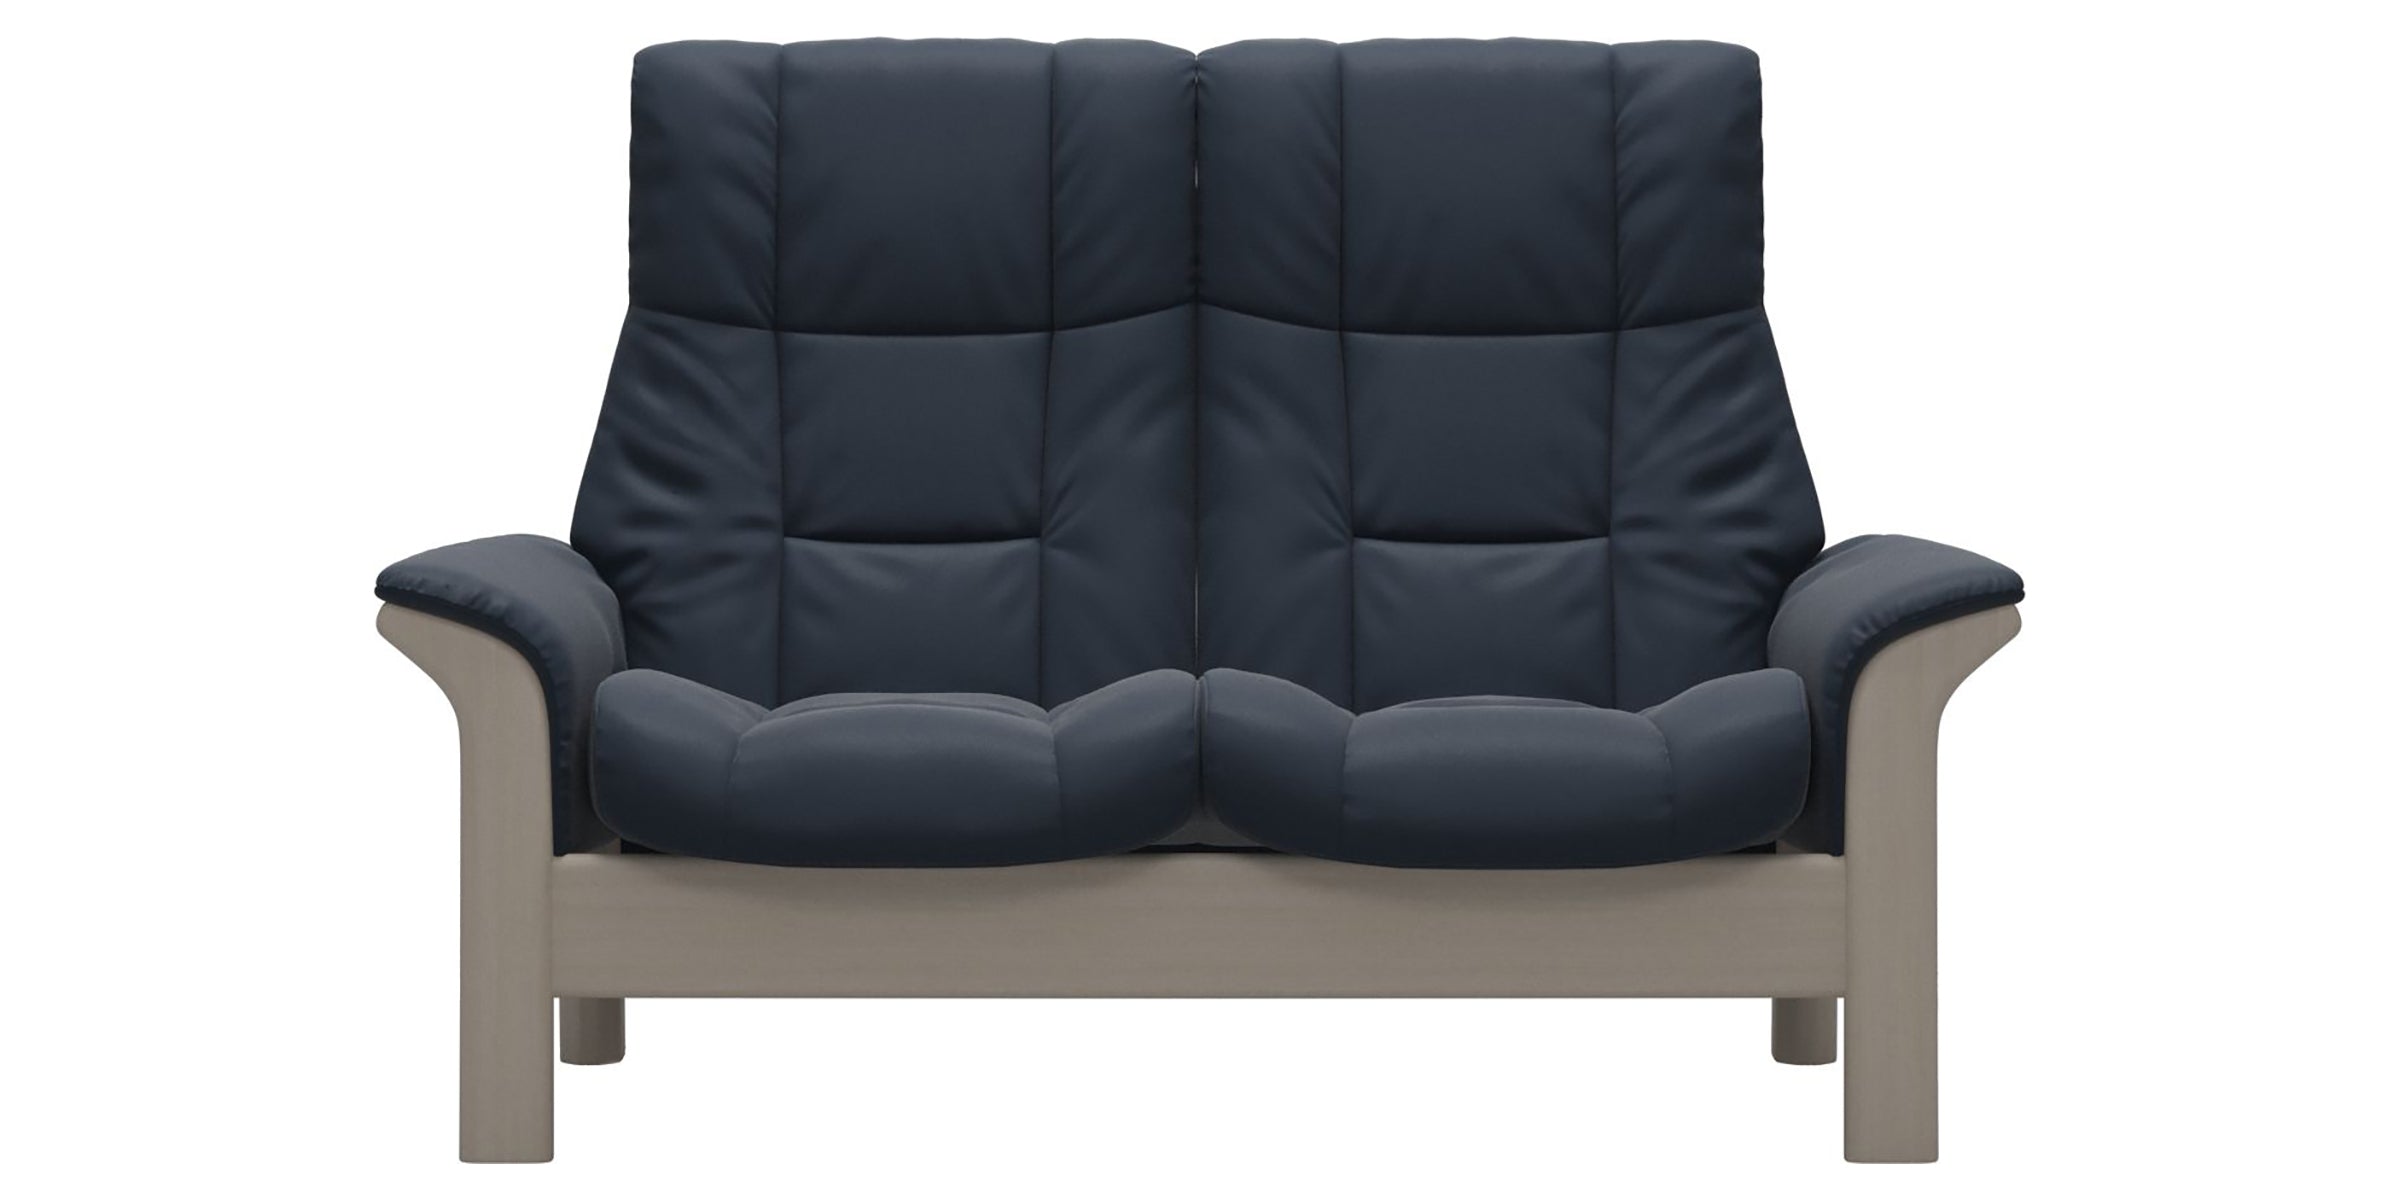 Paloma Leather Oxford Blue and Whitewash Base | Stressless Windsor 2-Seater High Back Sofa | Valley Ridge Furniture